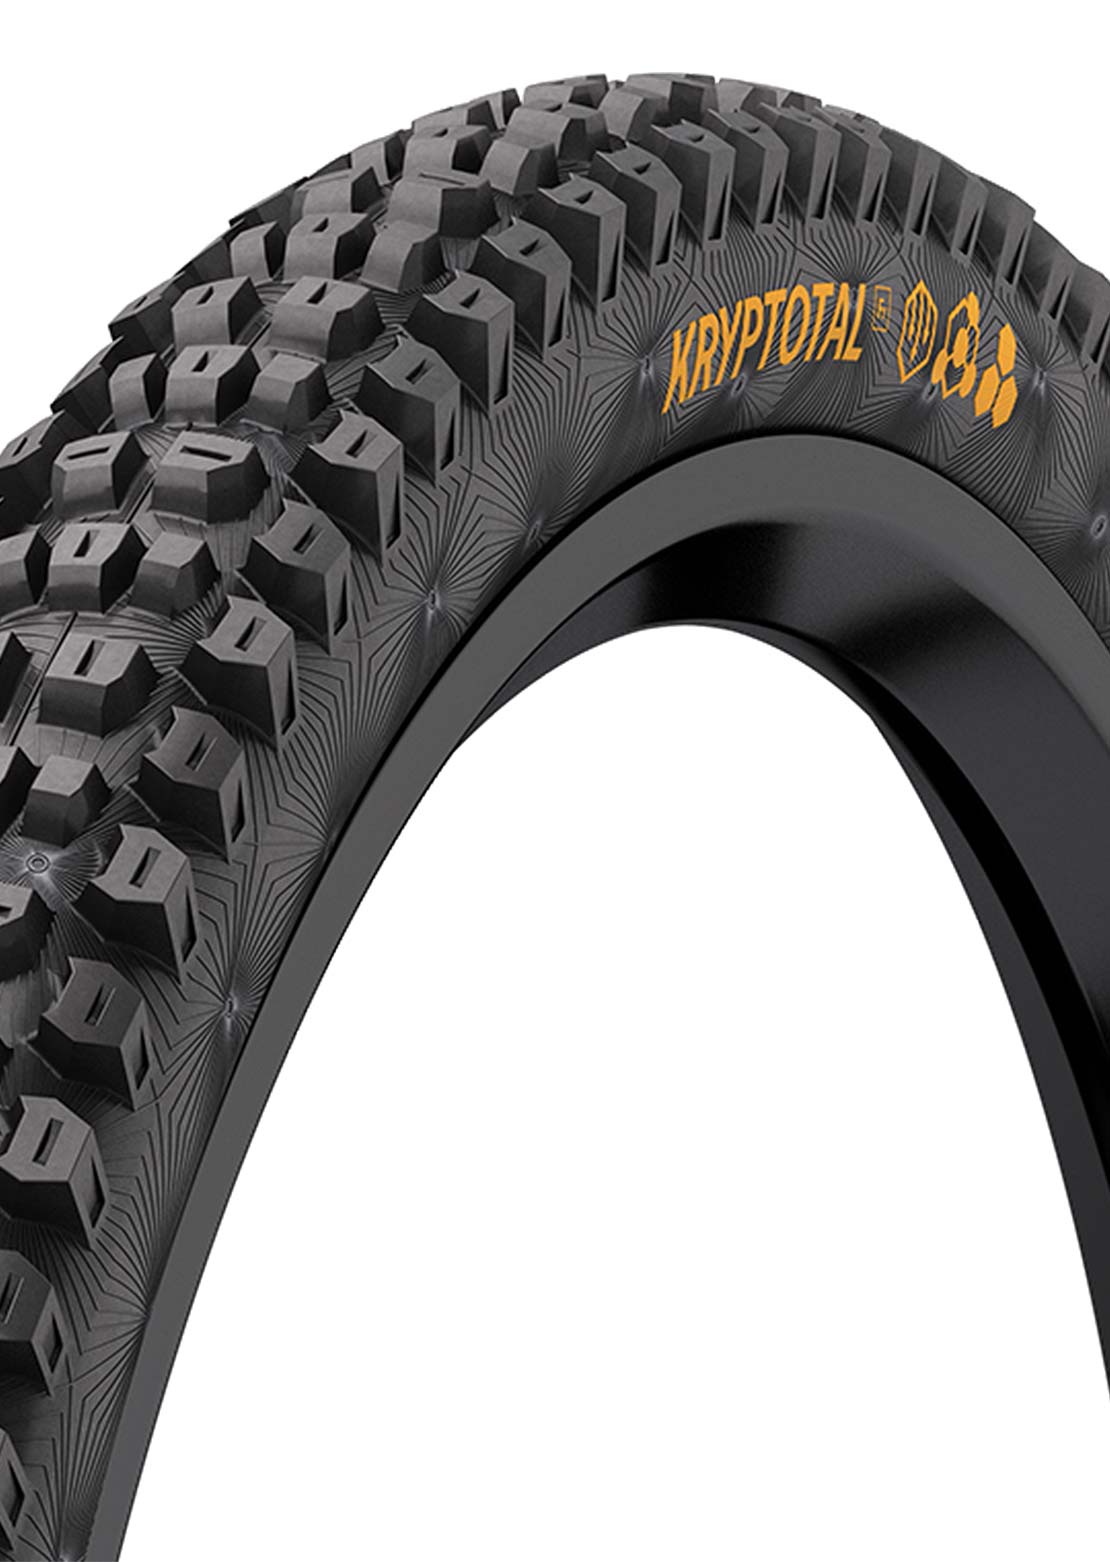 Continental Kryptotal-R Enduro Casing Soft Folding Mountain Bike Tires - 27.5&quot; x 2.4&quot;